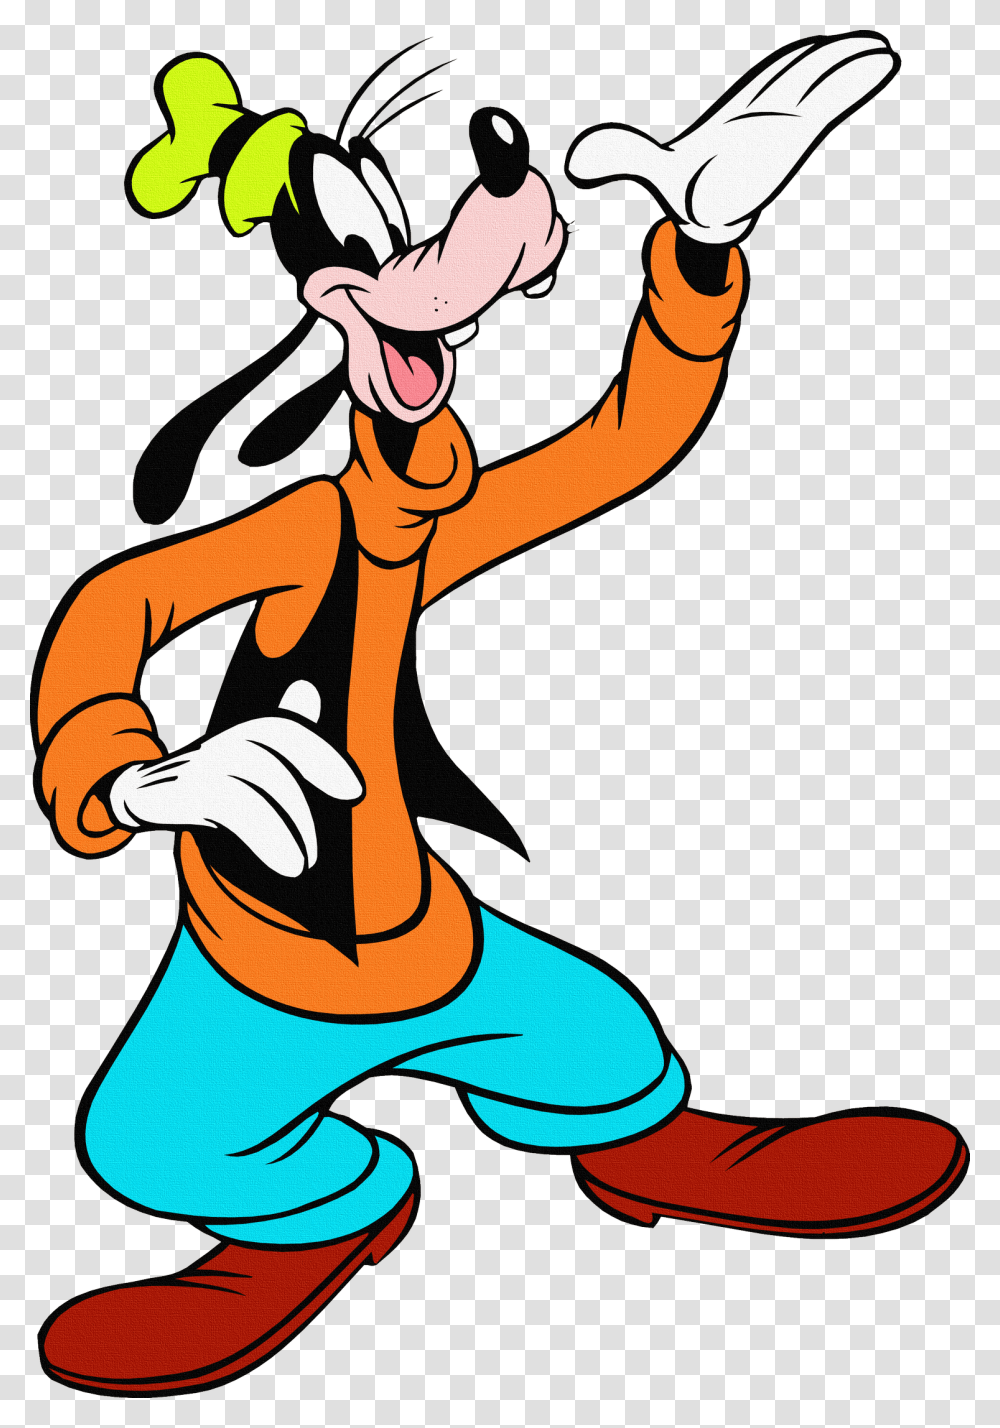 Goofy Disney Cartoon Characters, Hand, Kneeling, Drawing Transparent Png